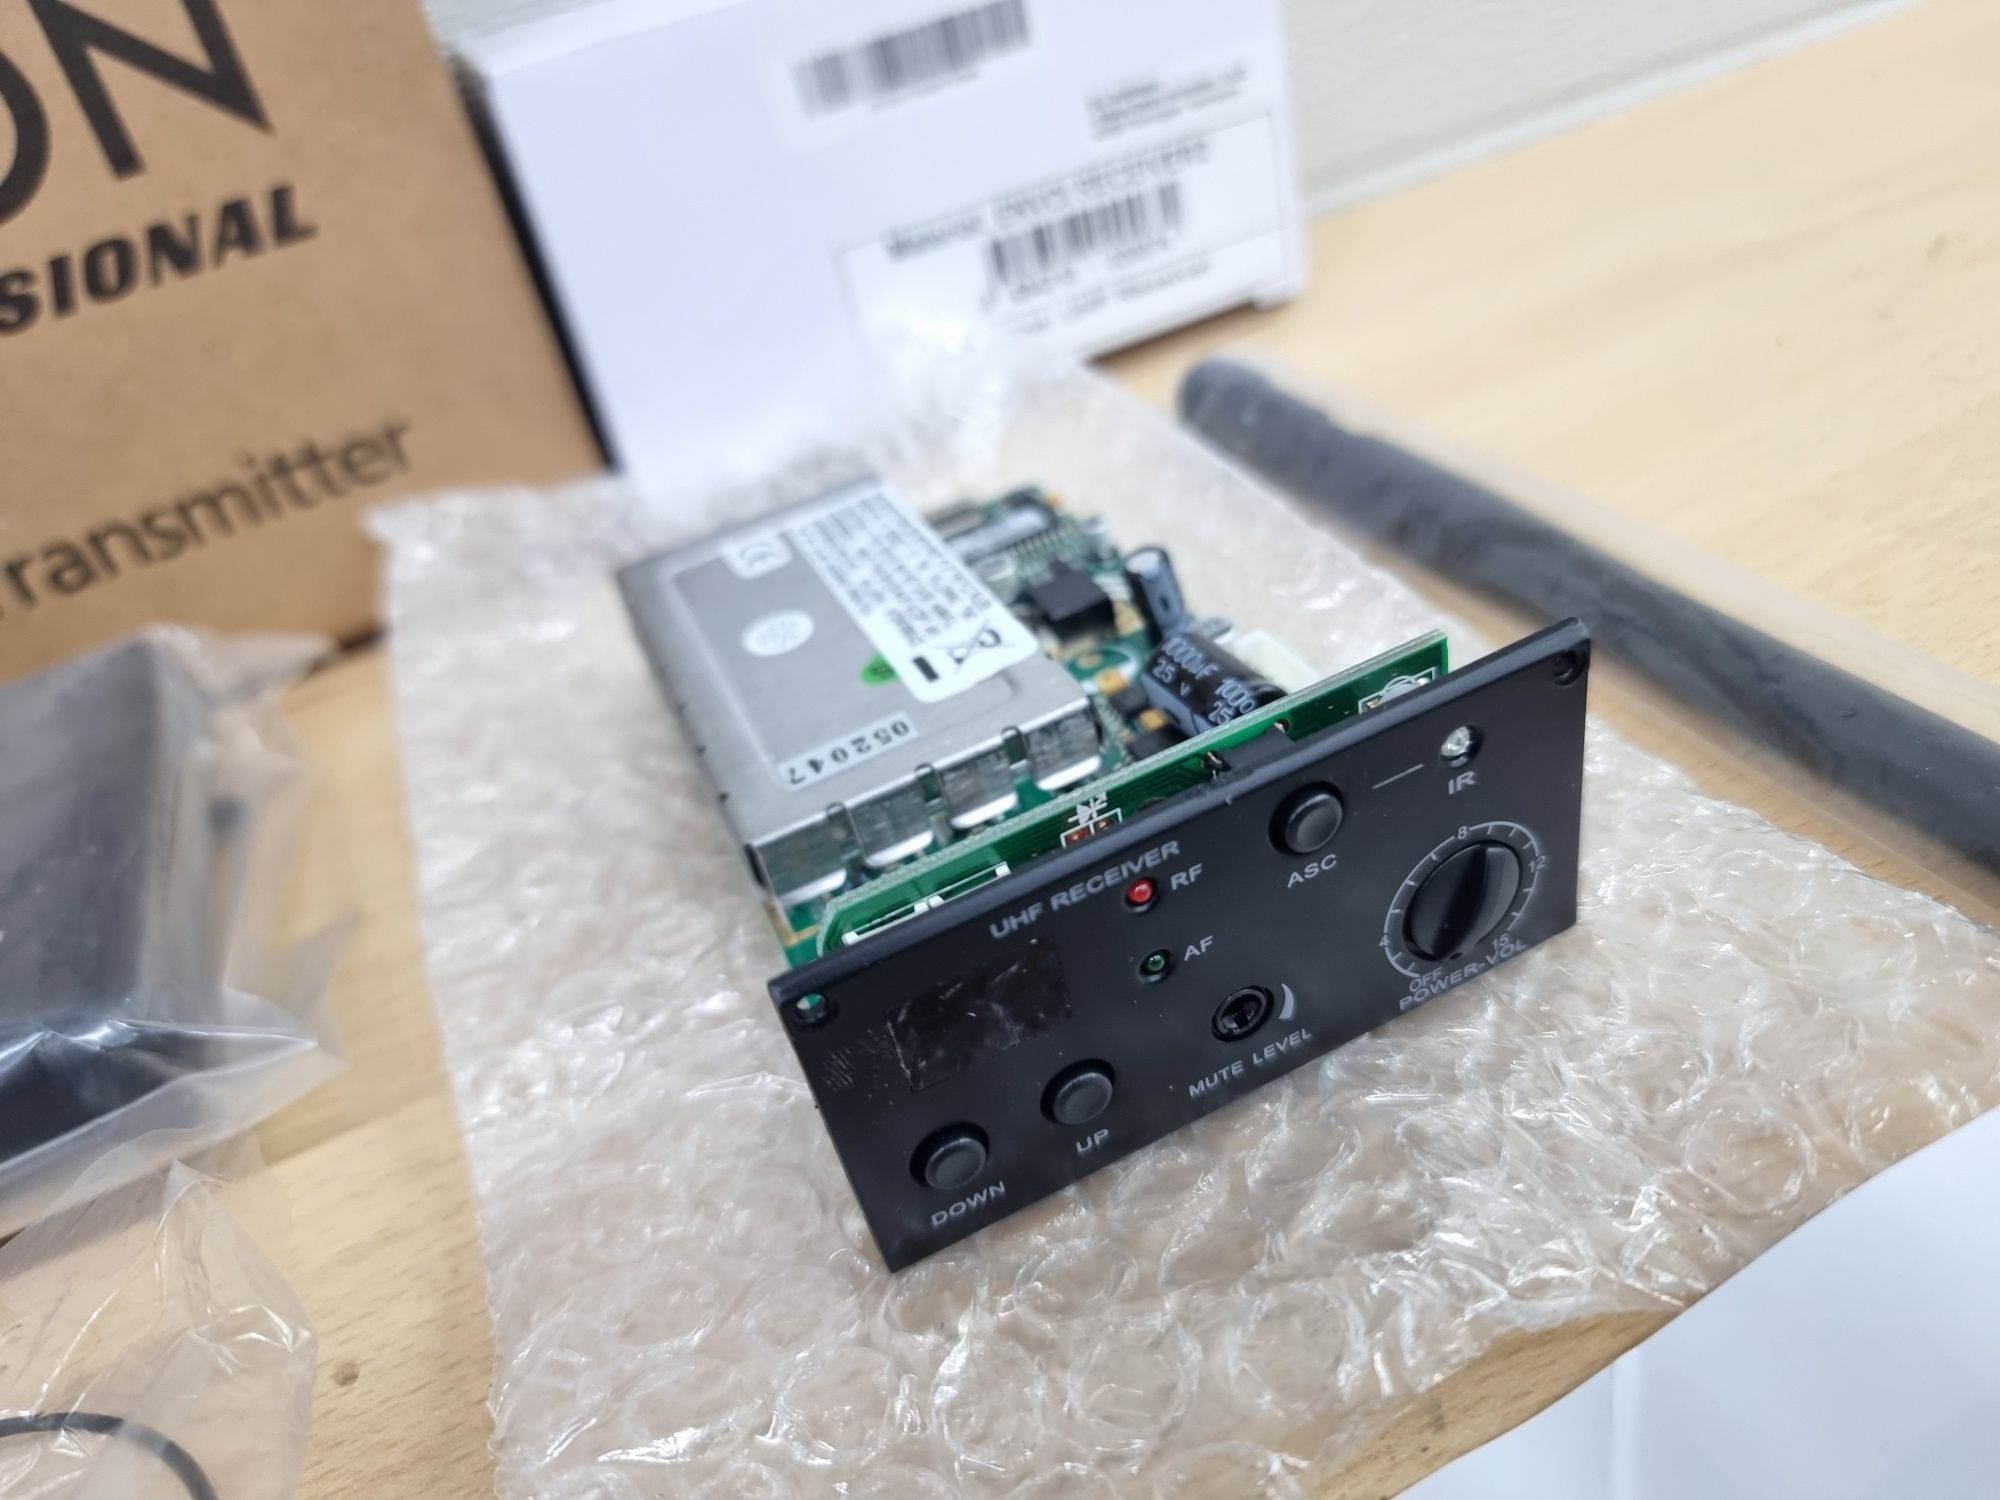 Denon Envoi set receiver mic hl transmitter zestaw bezprzewodowy